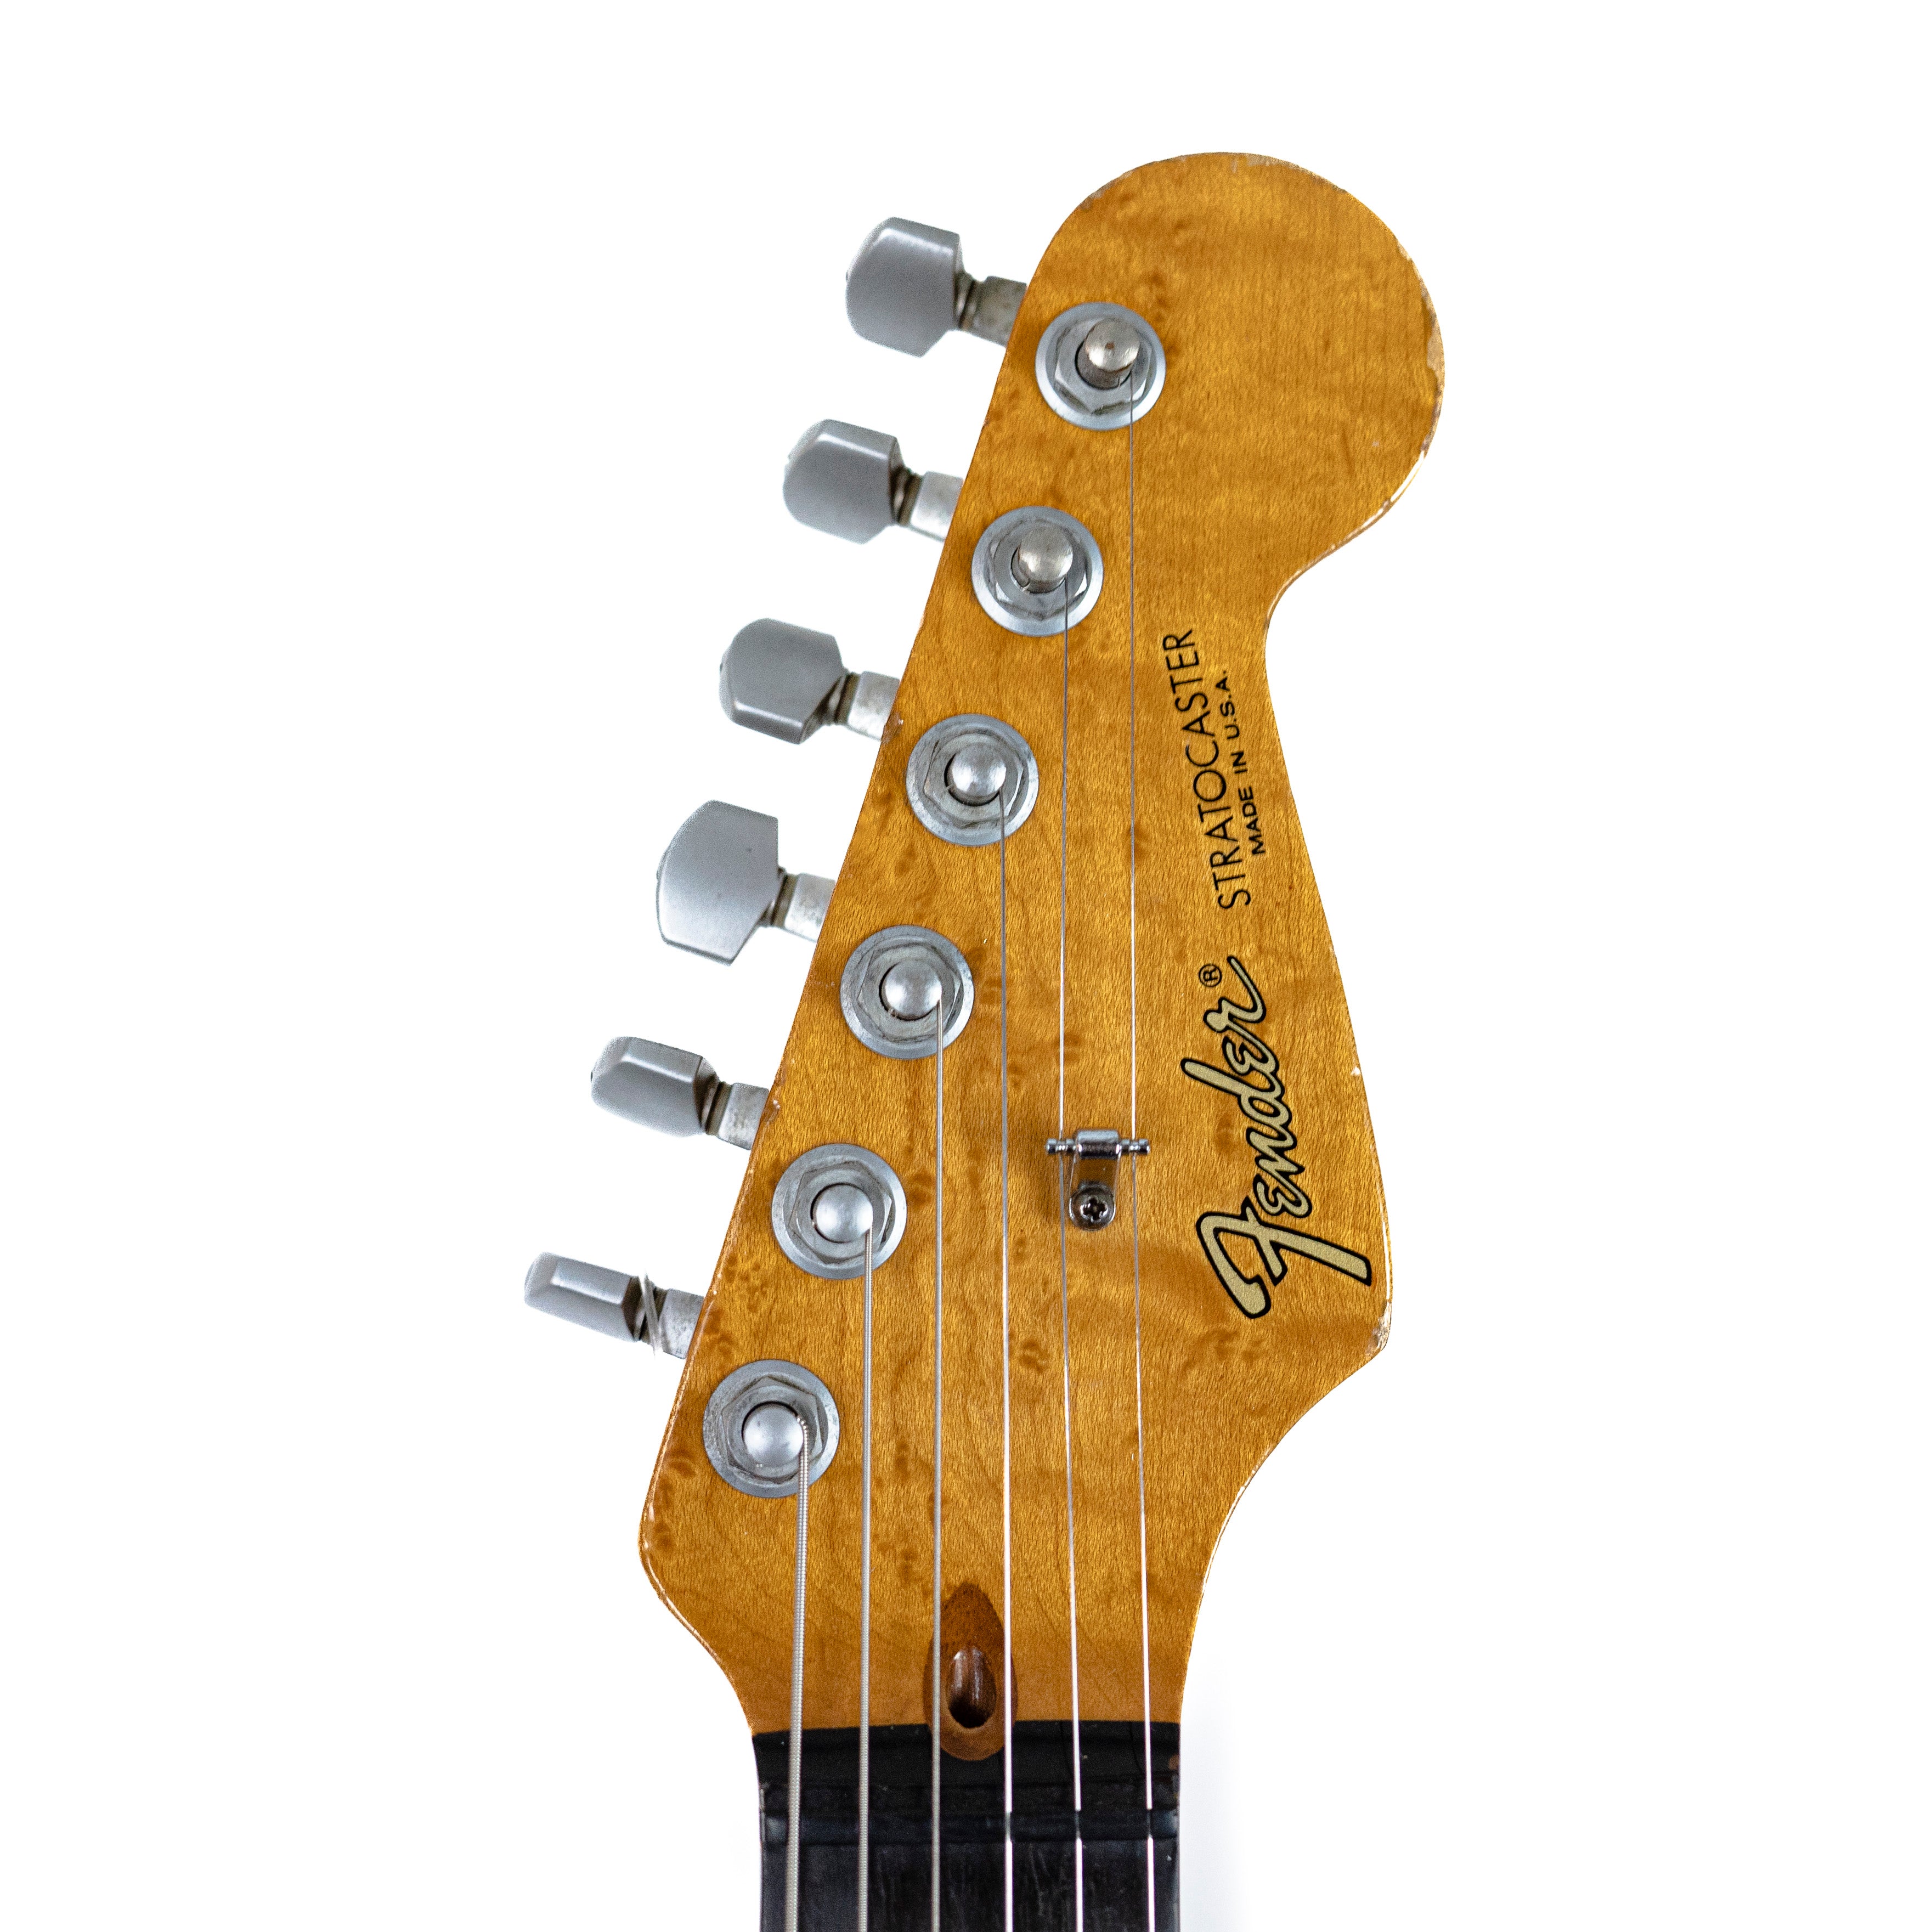 Fender 1990 35th Anniversary Custom Shop Stratocaster 3TSB #166 of 500